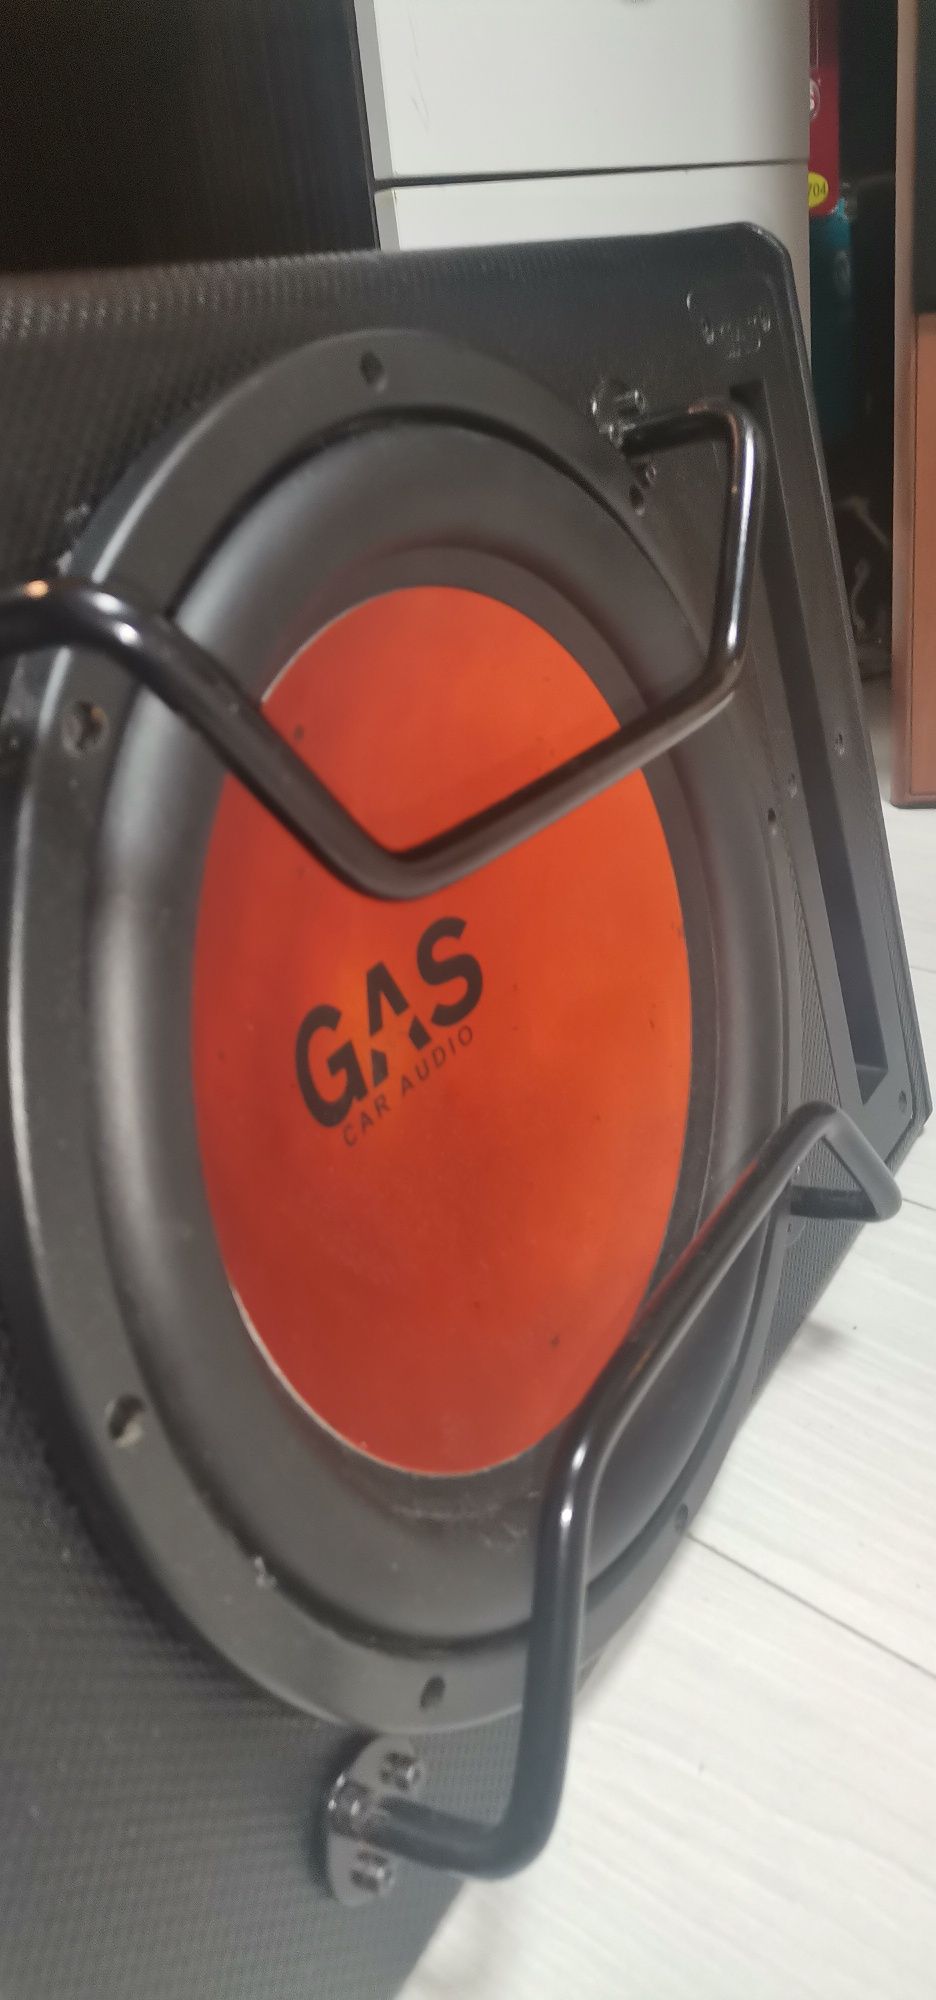 Subwoofer Gas car audio